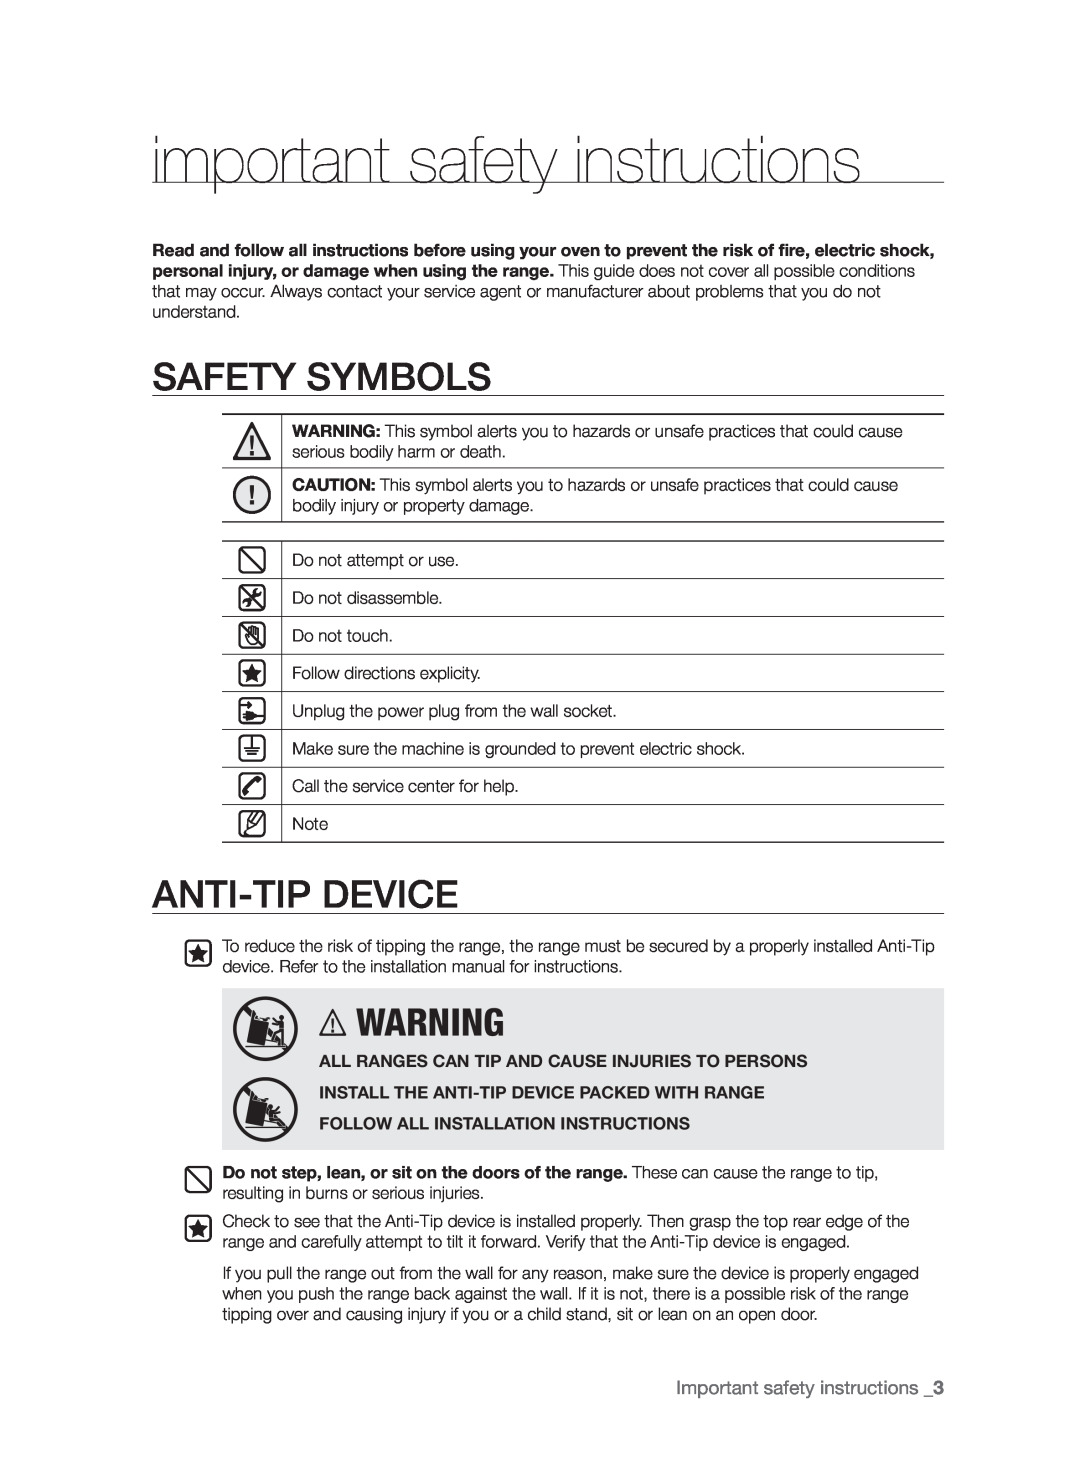 Samsung FTQ352IWB important safety instructions, Safety Symbols, Anti-Tipdevice, Important safety instructions _ 